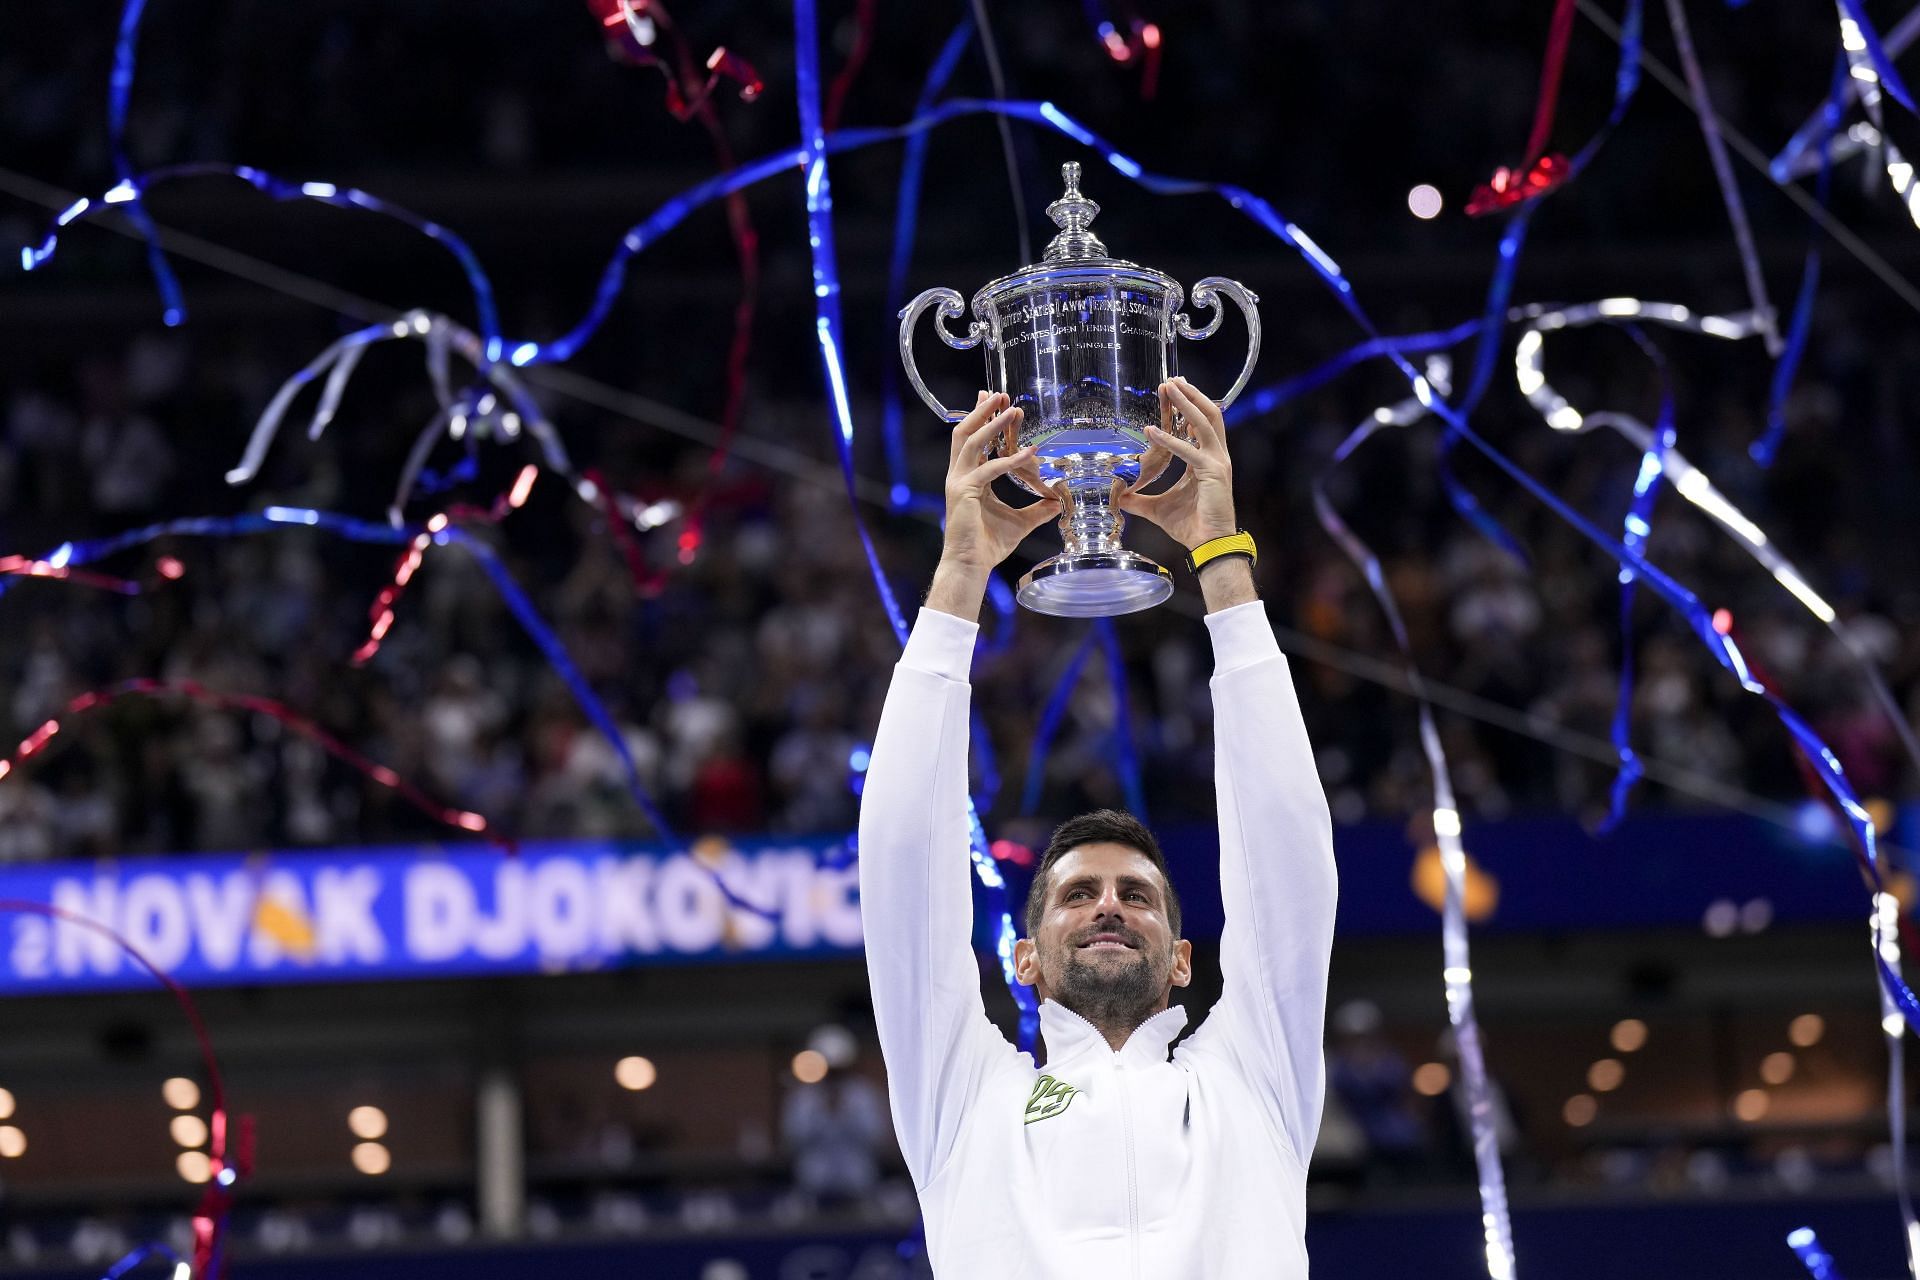 Novak Djokovic lifts the US Open trophy.